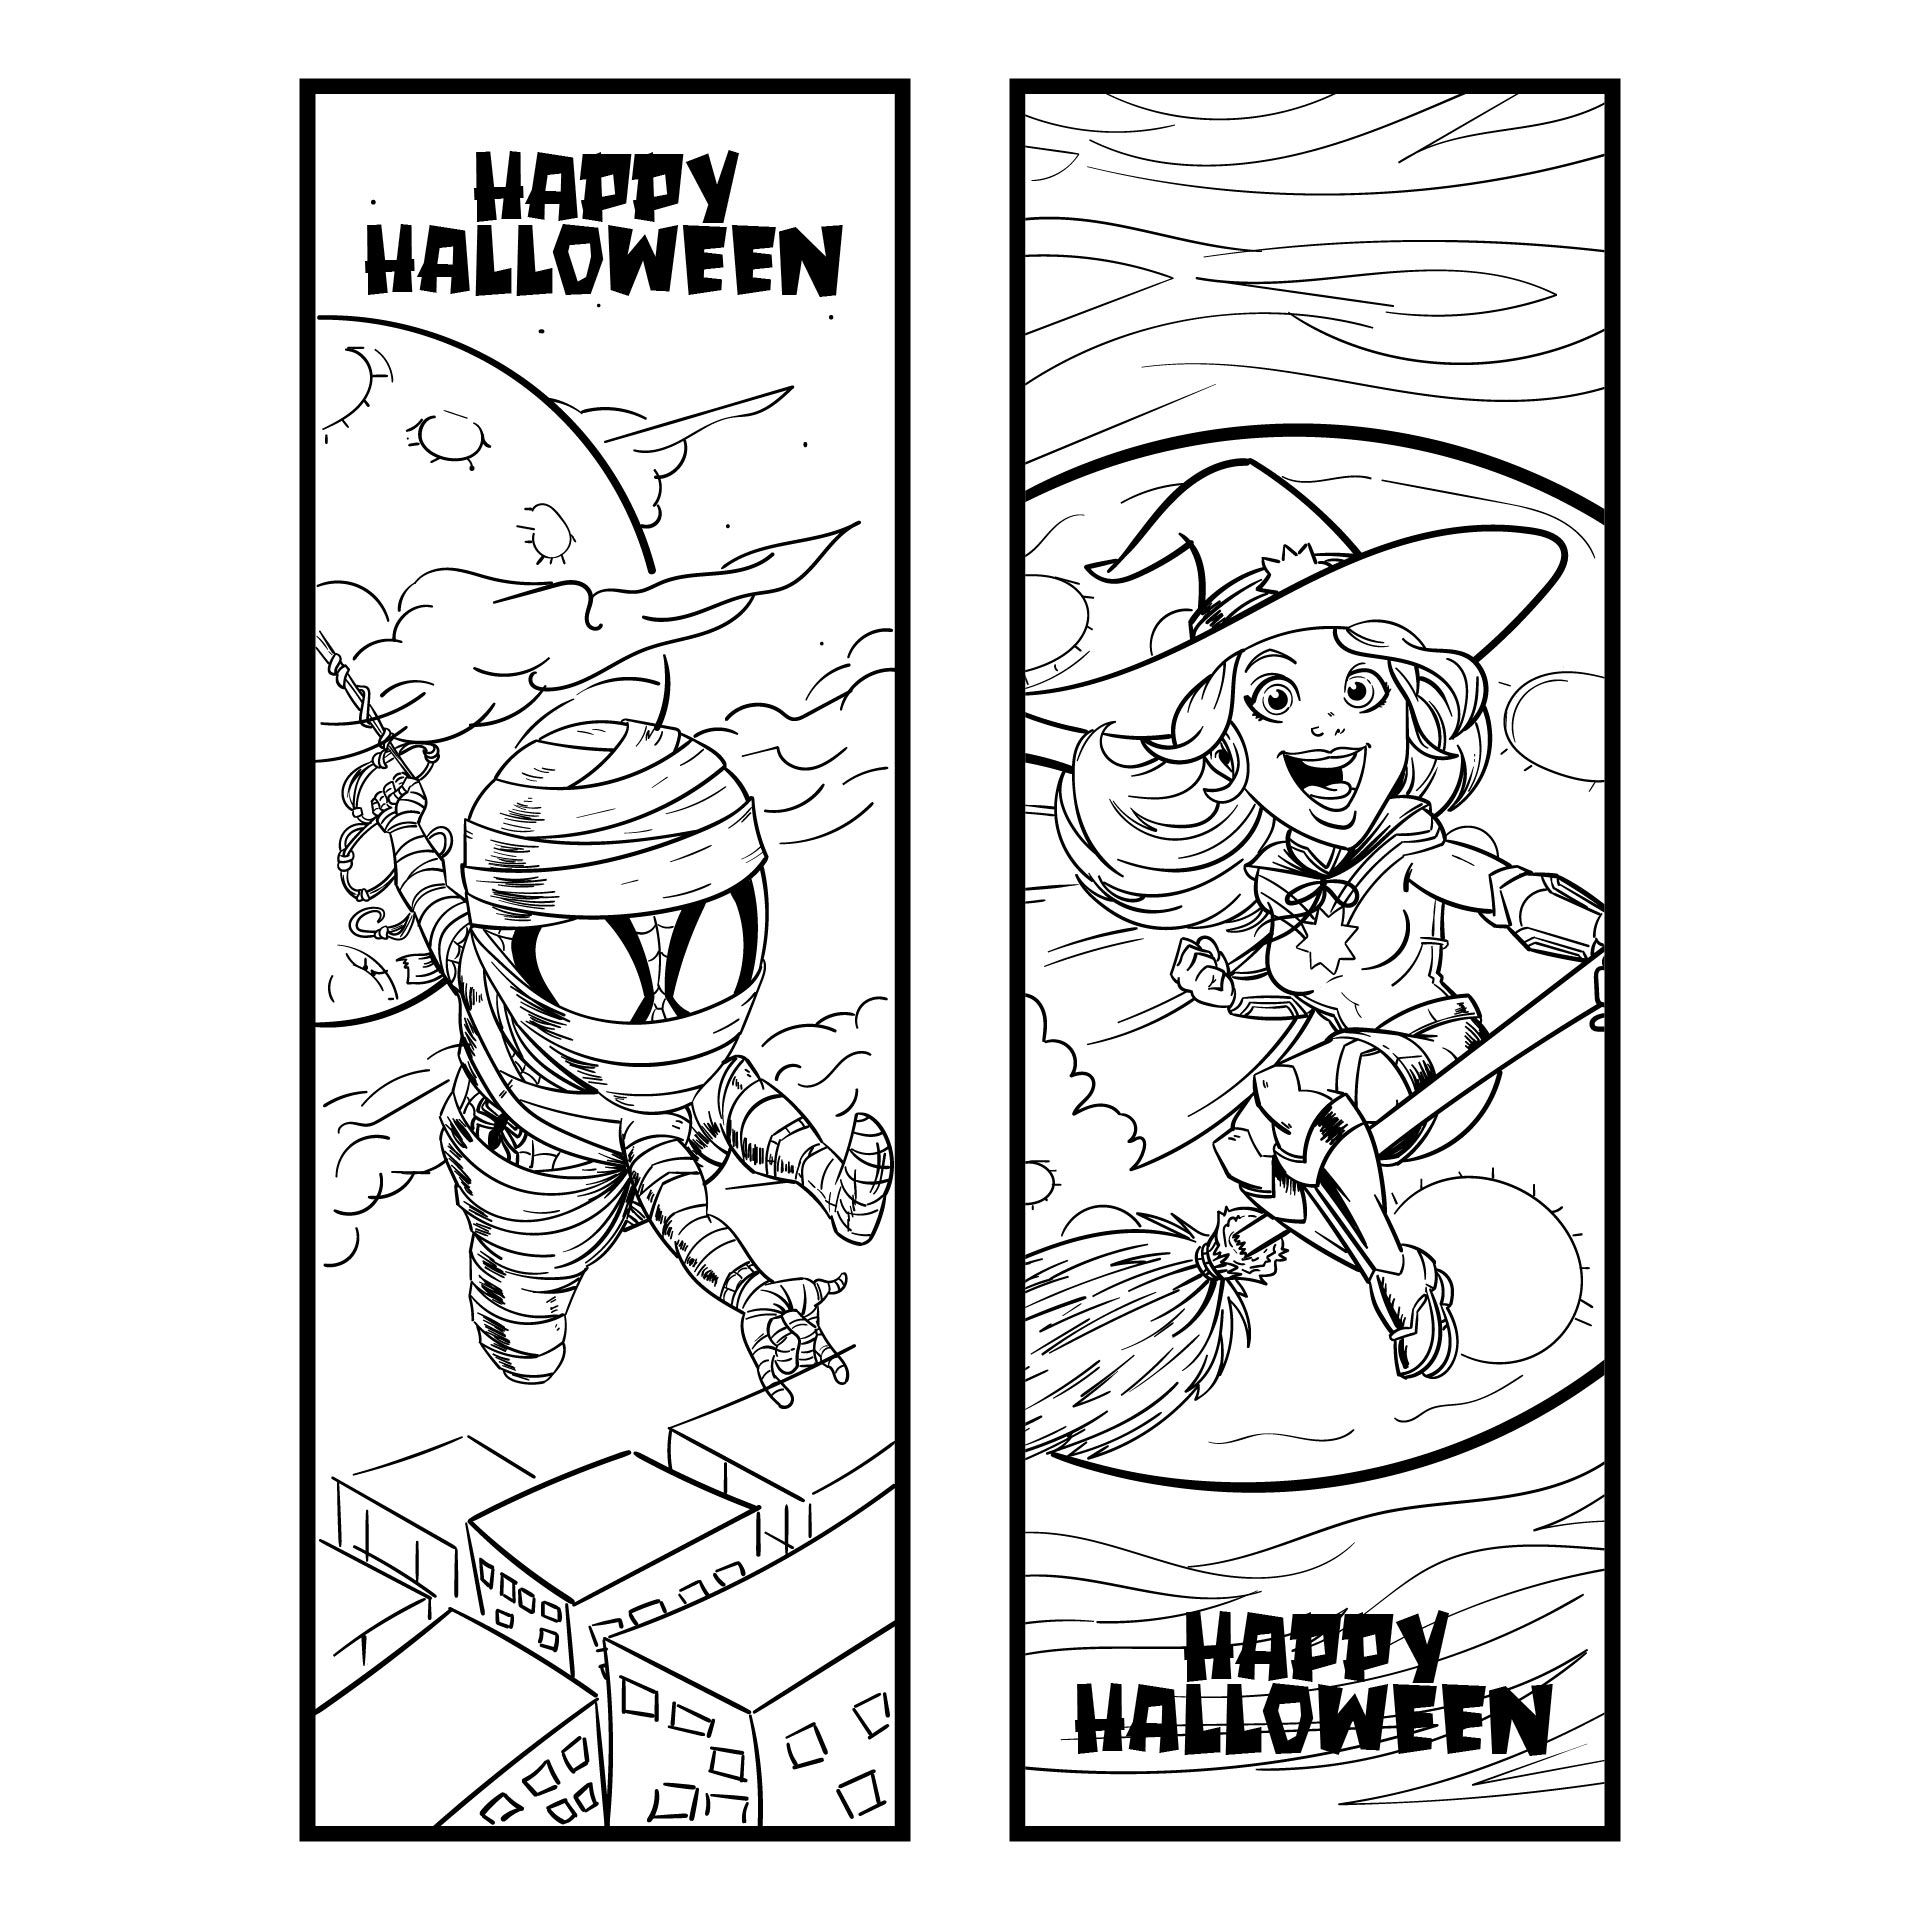 Printable Halloween Bookmarks to Color